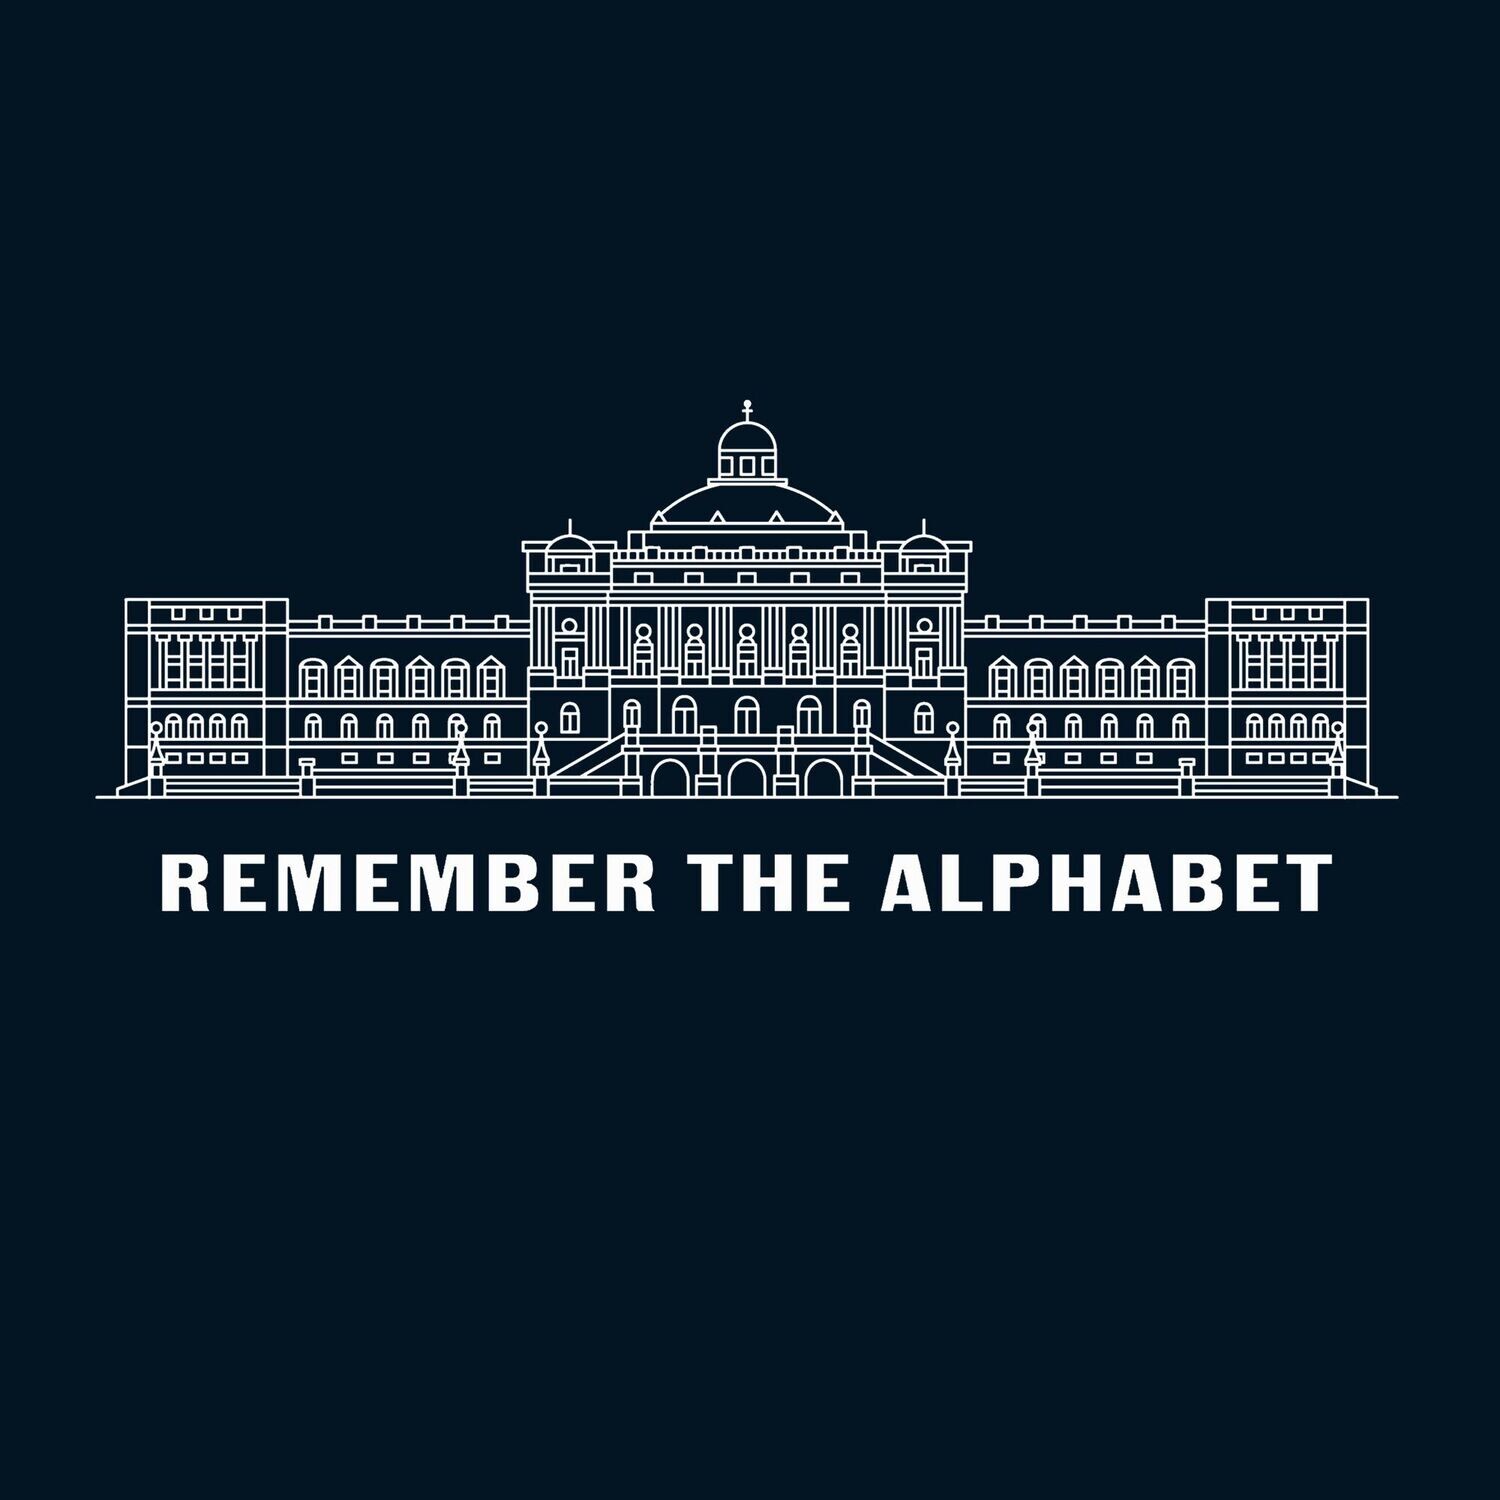 REMEMBER THE ALPHABET